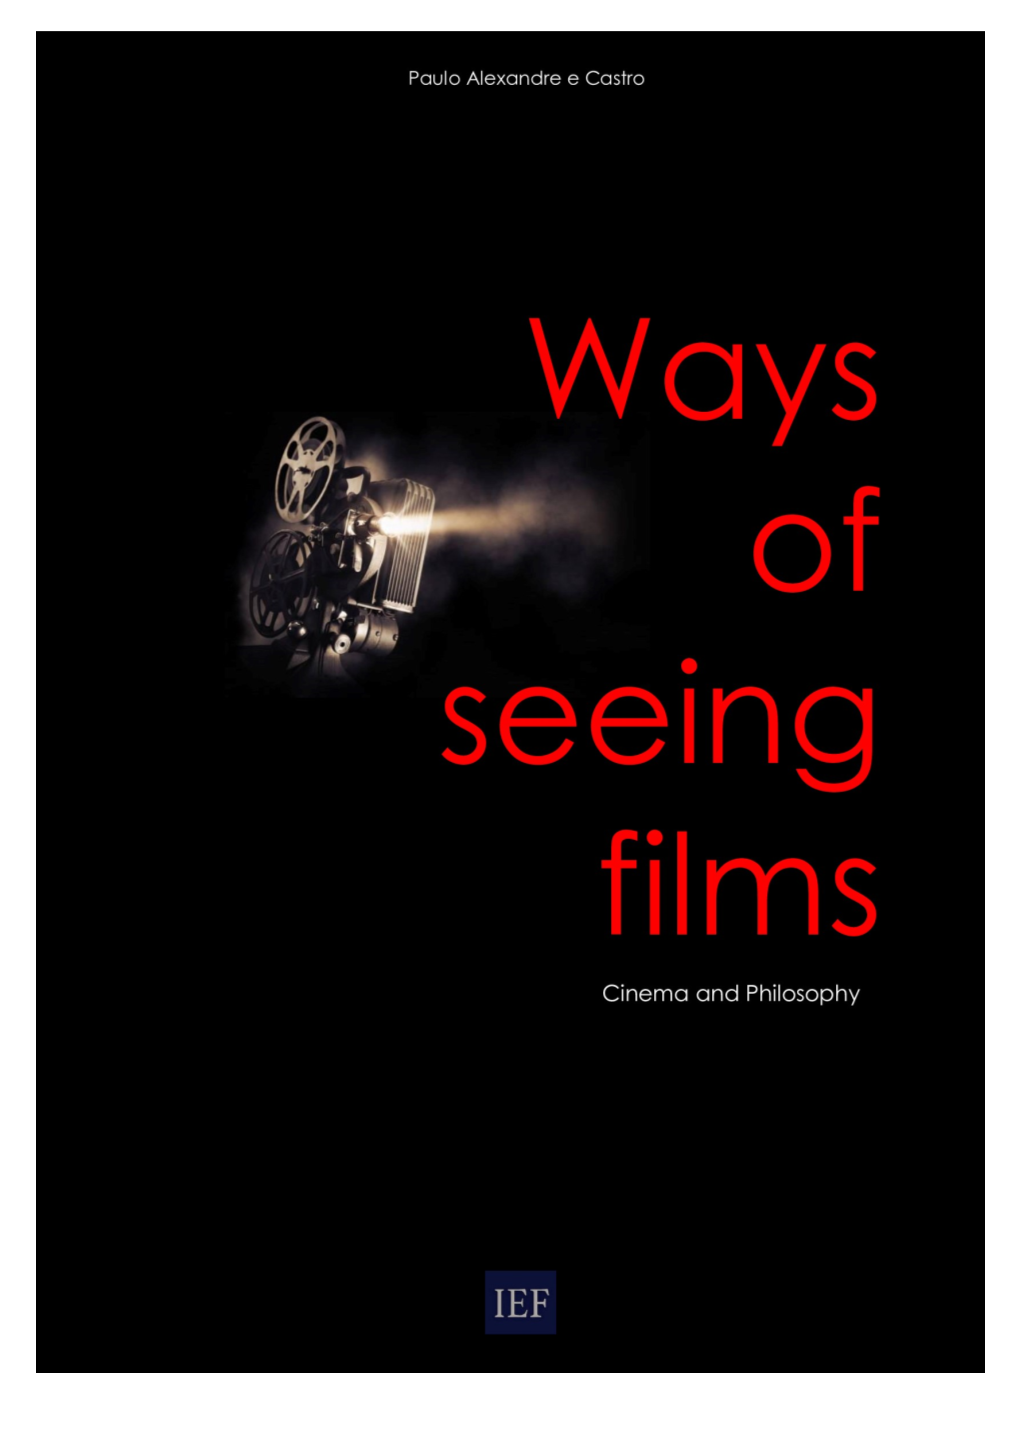 Ways of Seeing Films Cinema and Philosophy